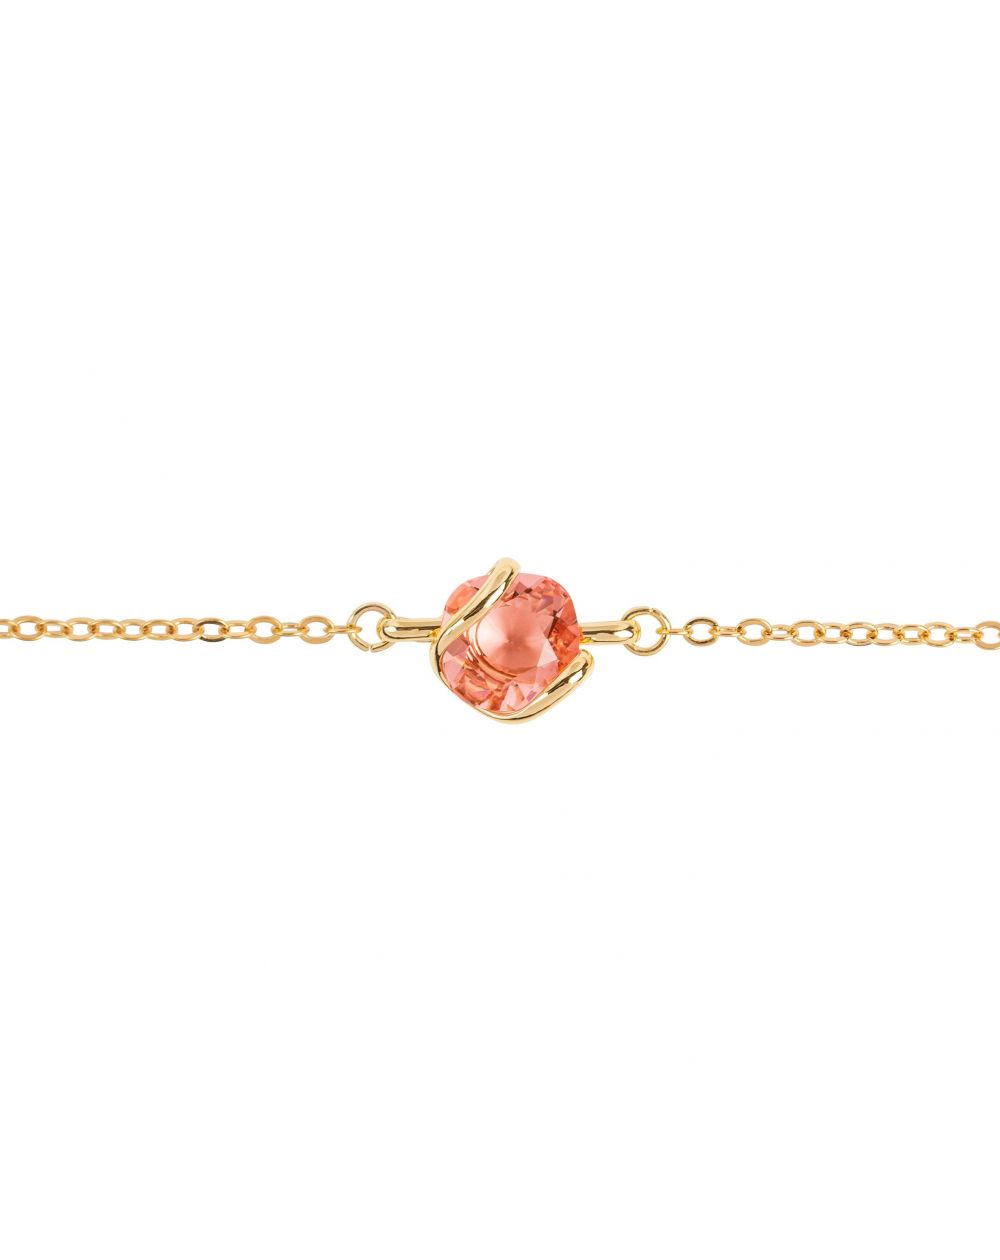 Andrea Marazzini bijoux - Bracelet cristal Swarovski Mini Peach